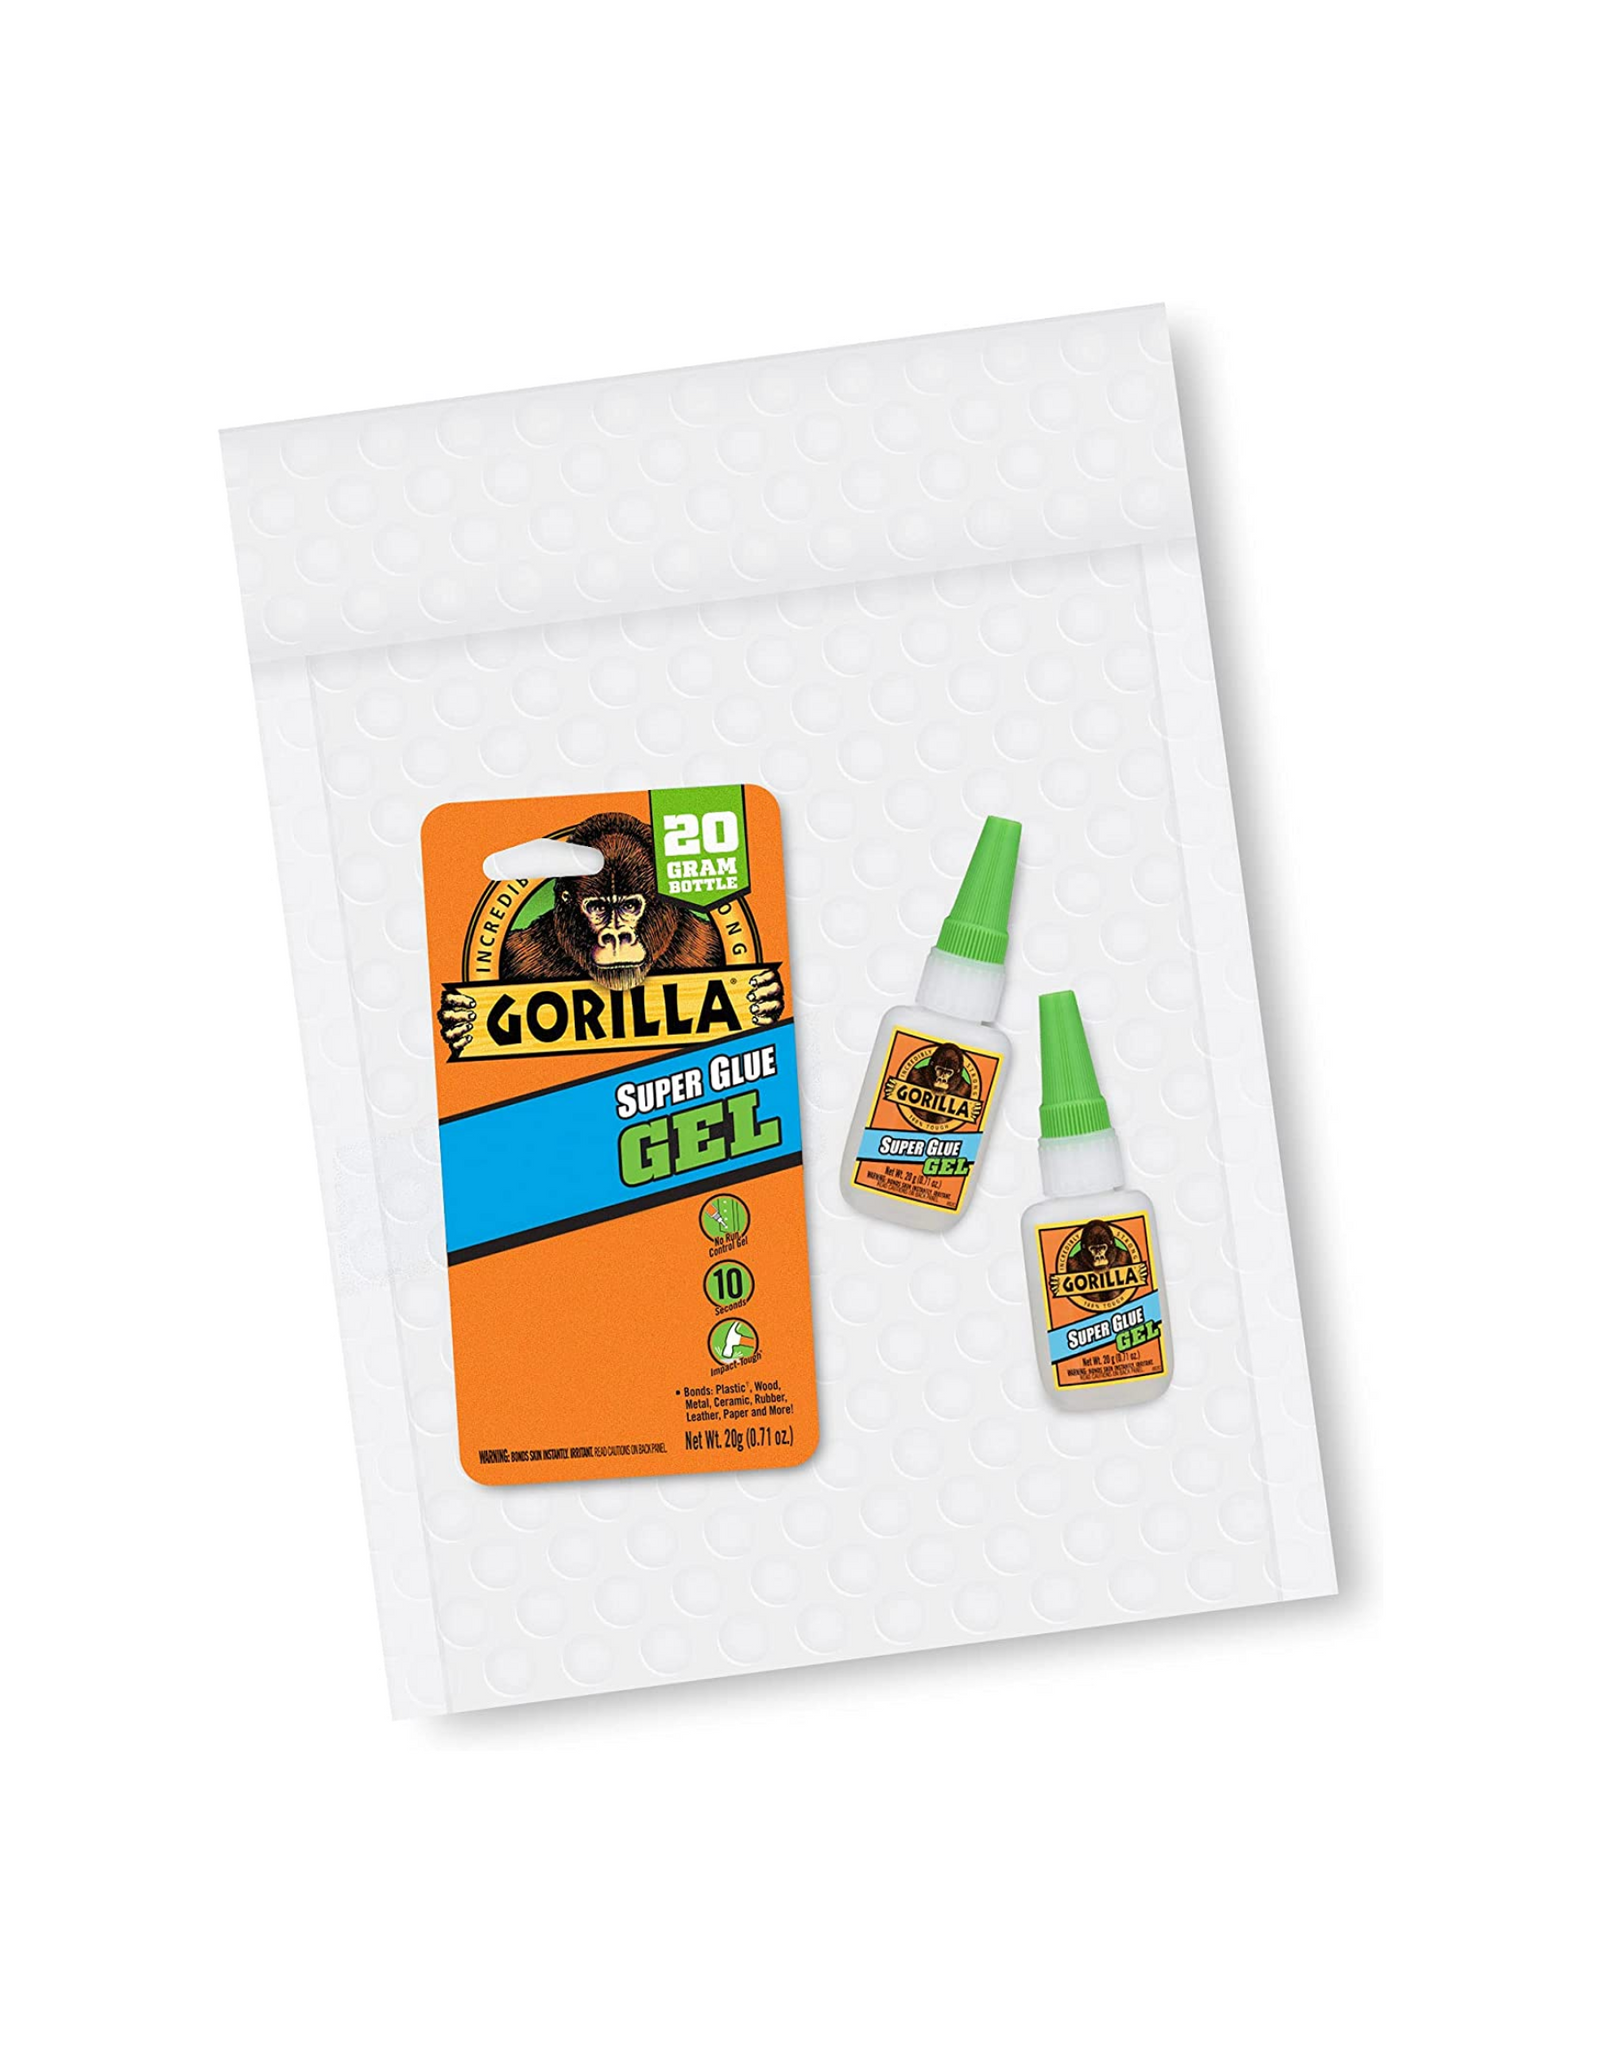 Gorilla Super Glue Gel, 0.71 oz (20 Gram), Pack of 2